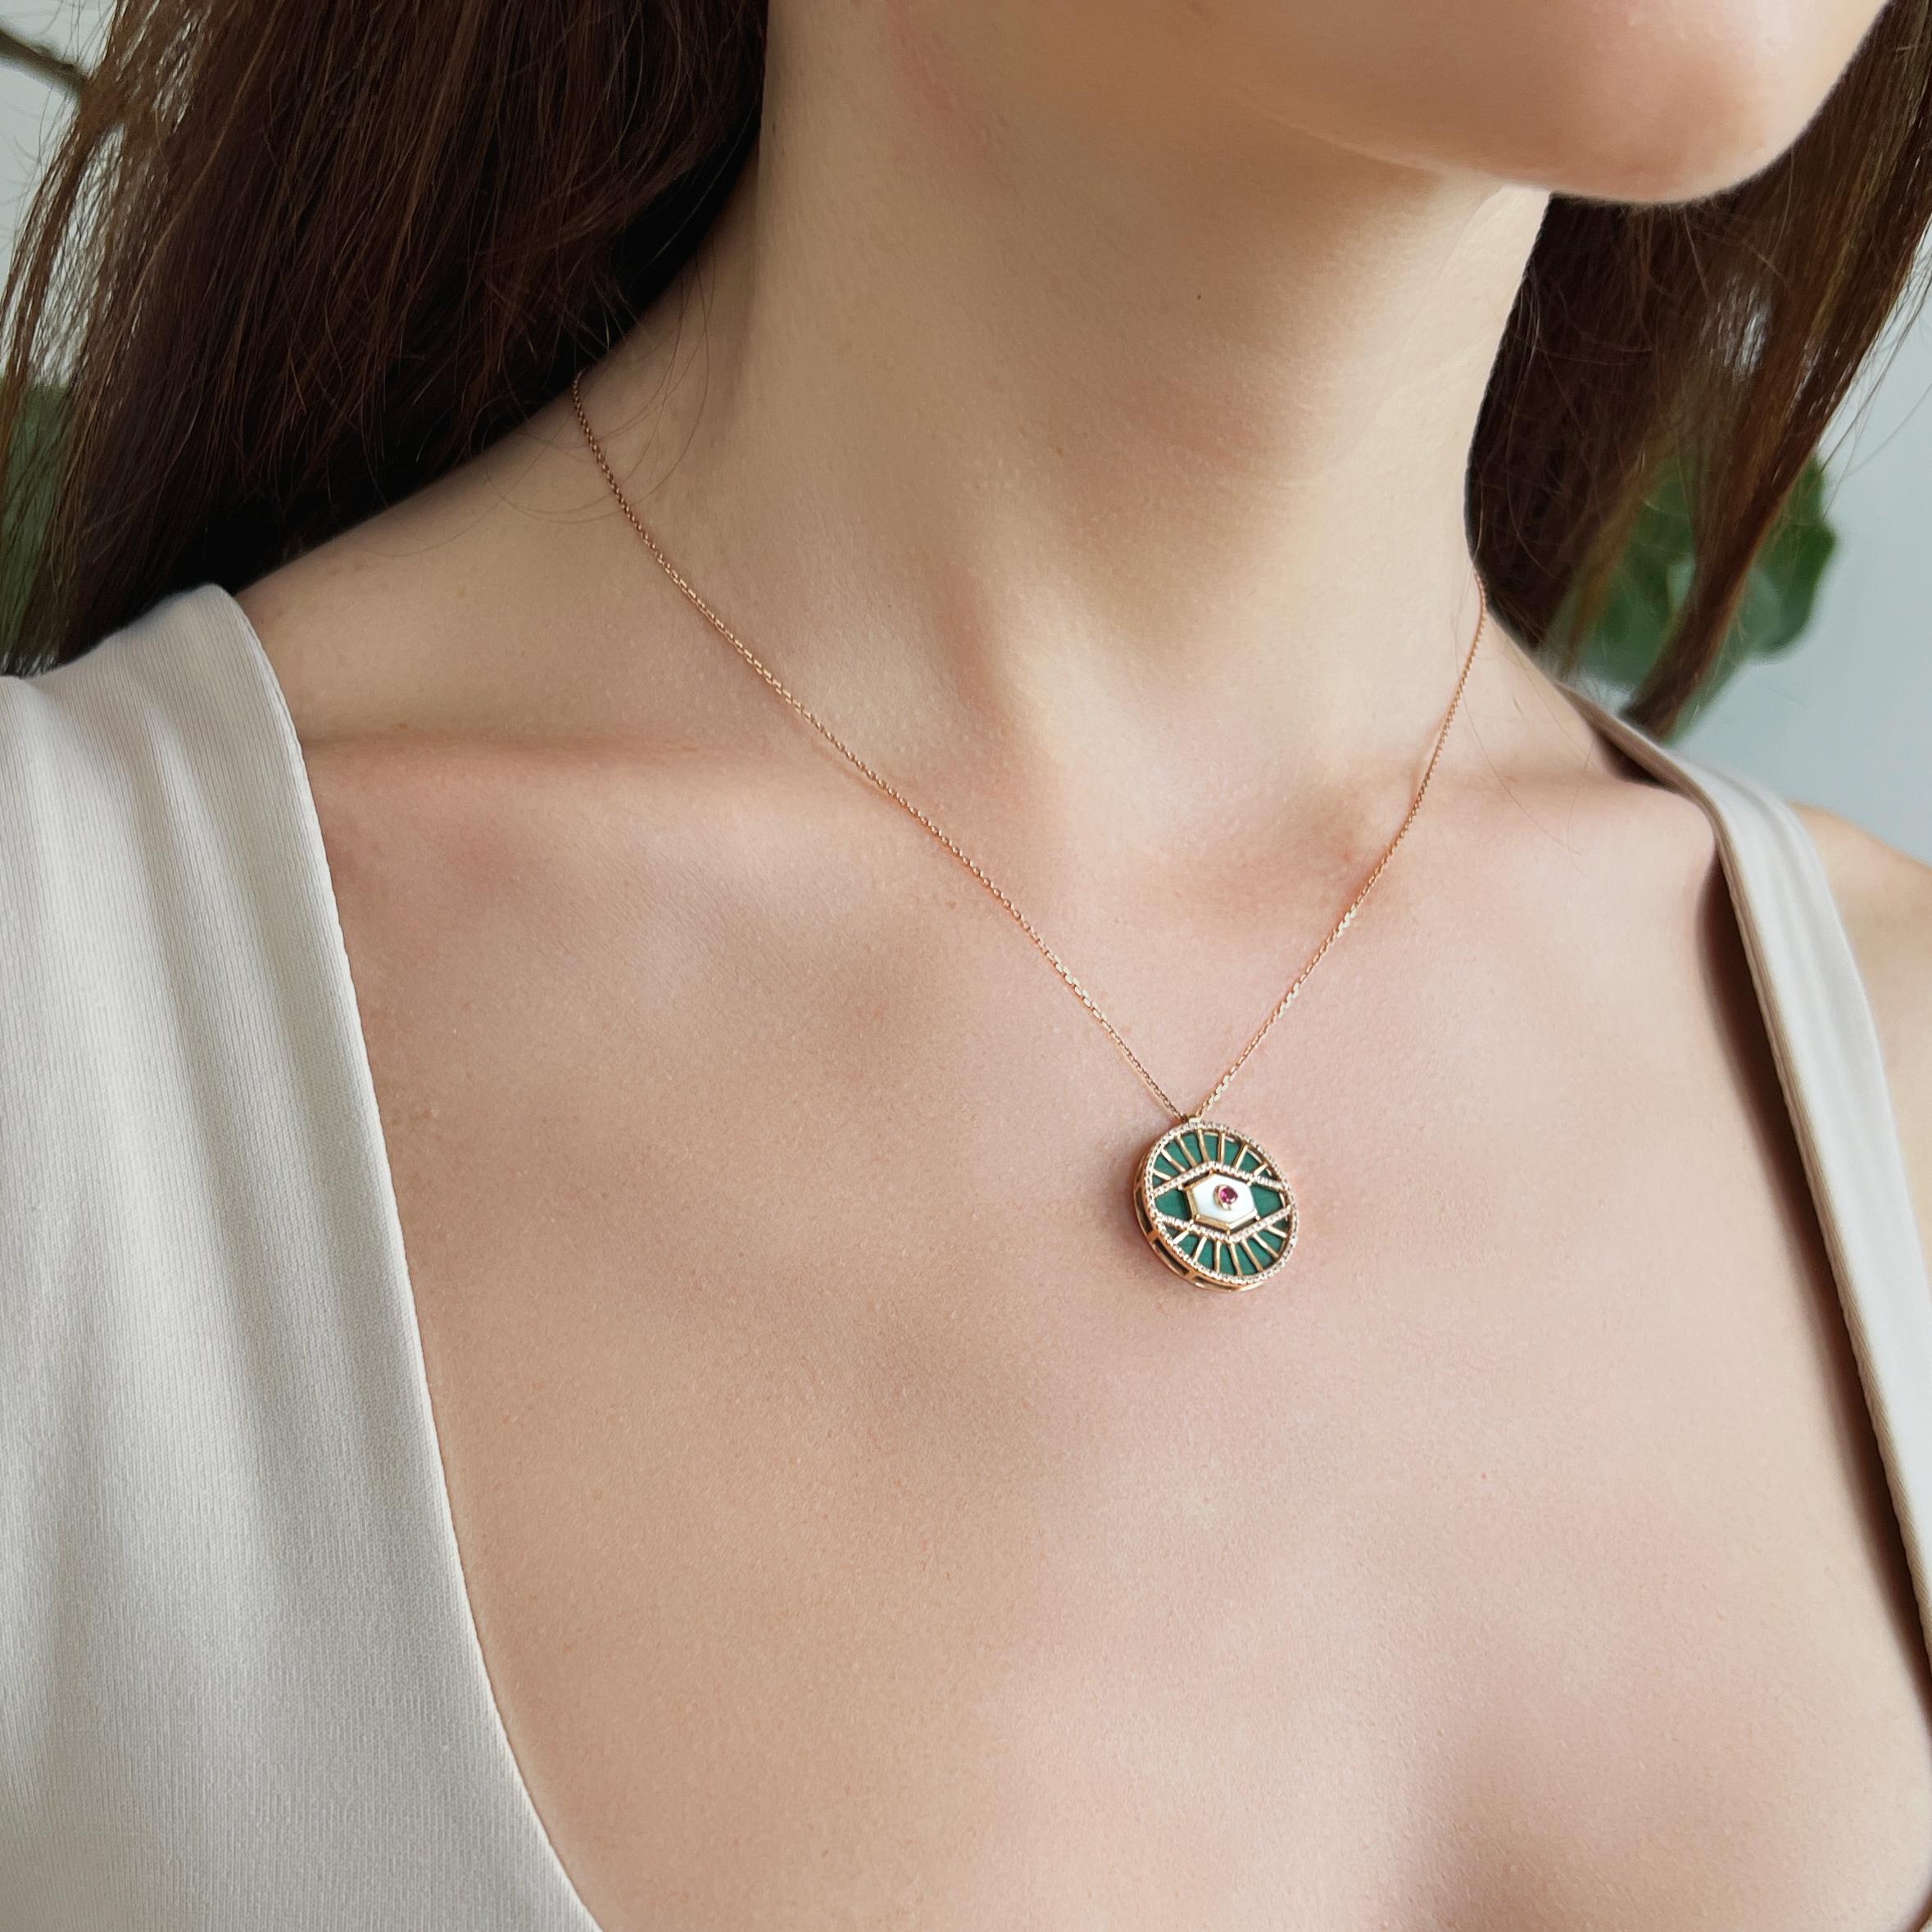 18K Rose Gold Evil Eye Diamond Pendant Necklace with Malachite
Length: 16.5